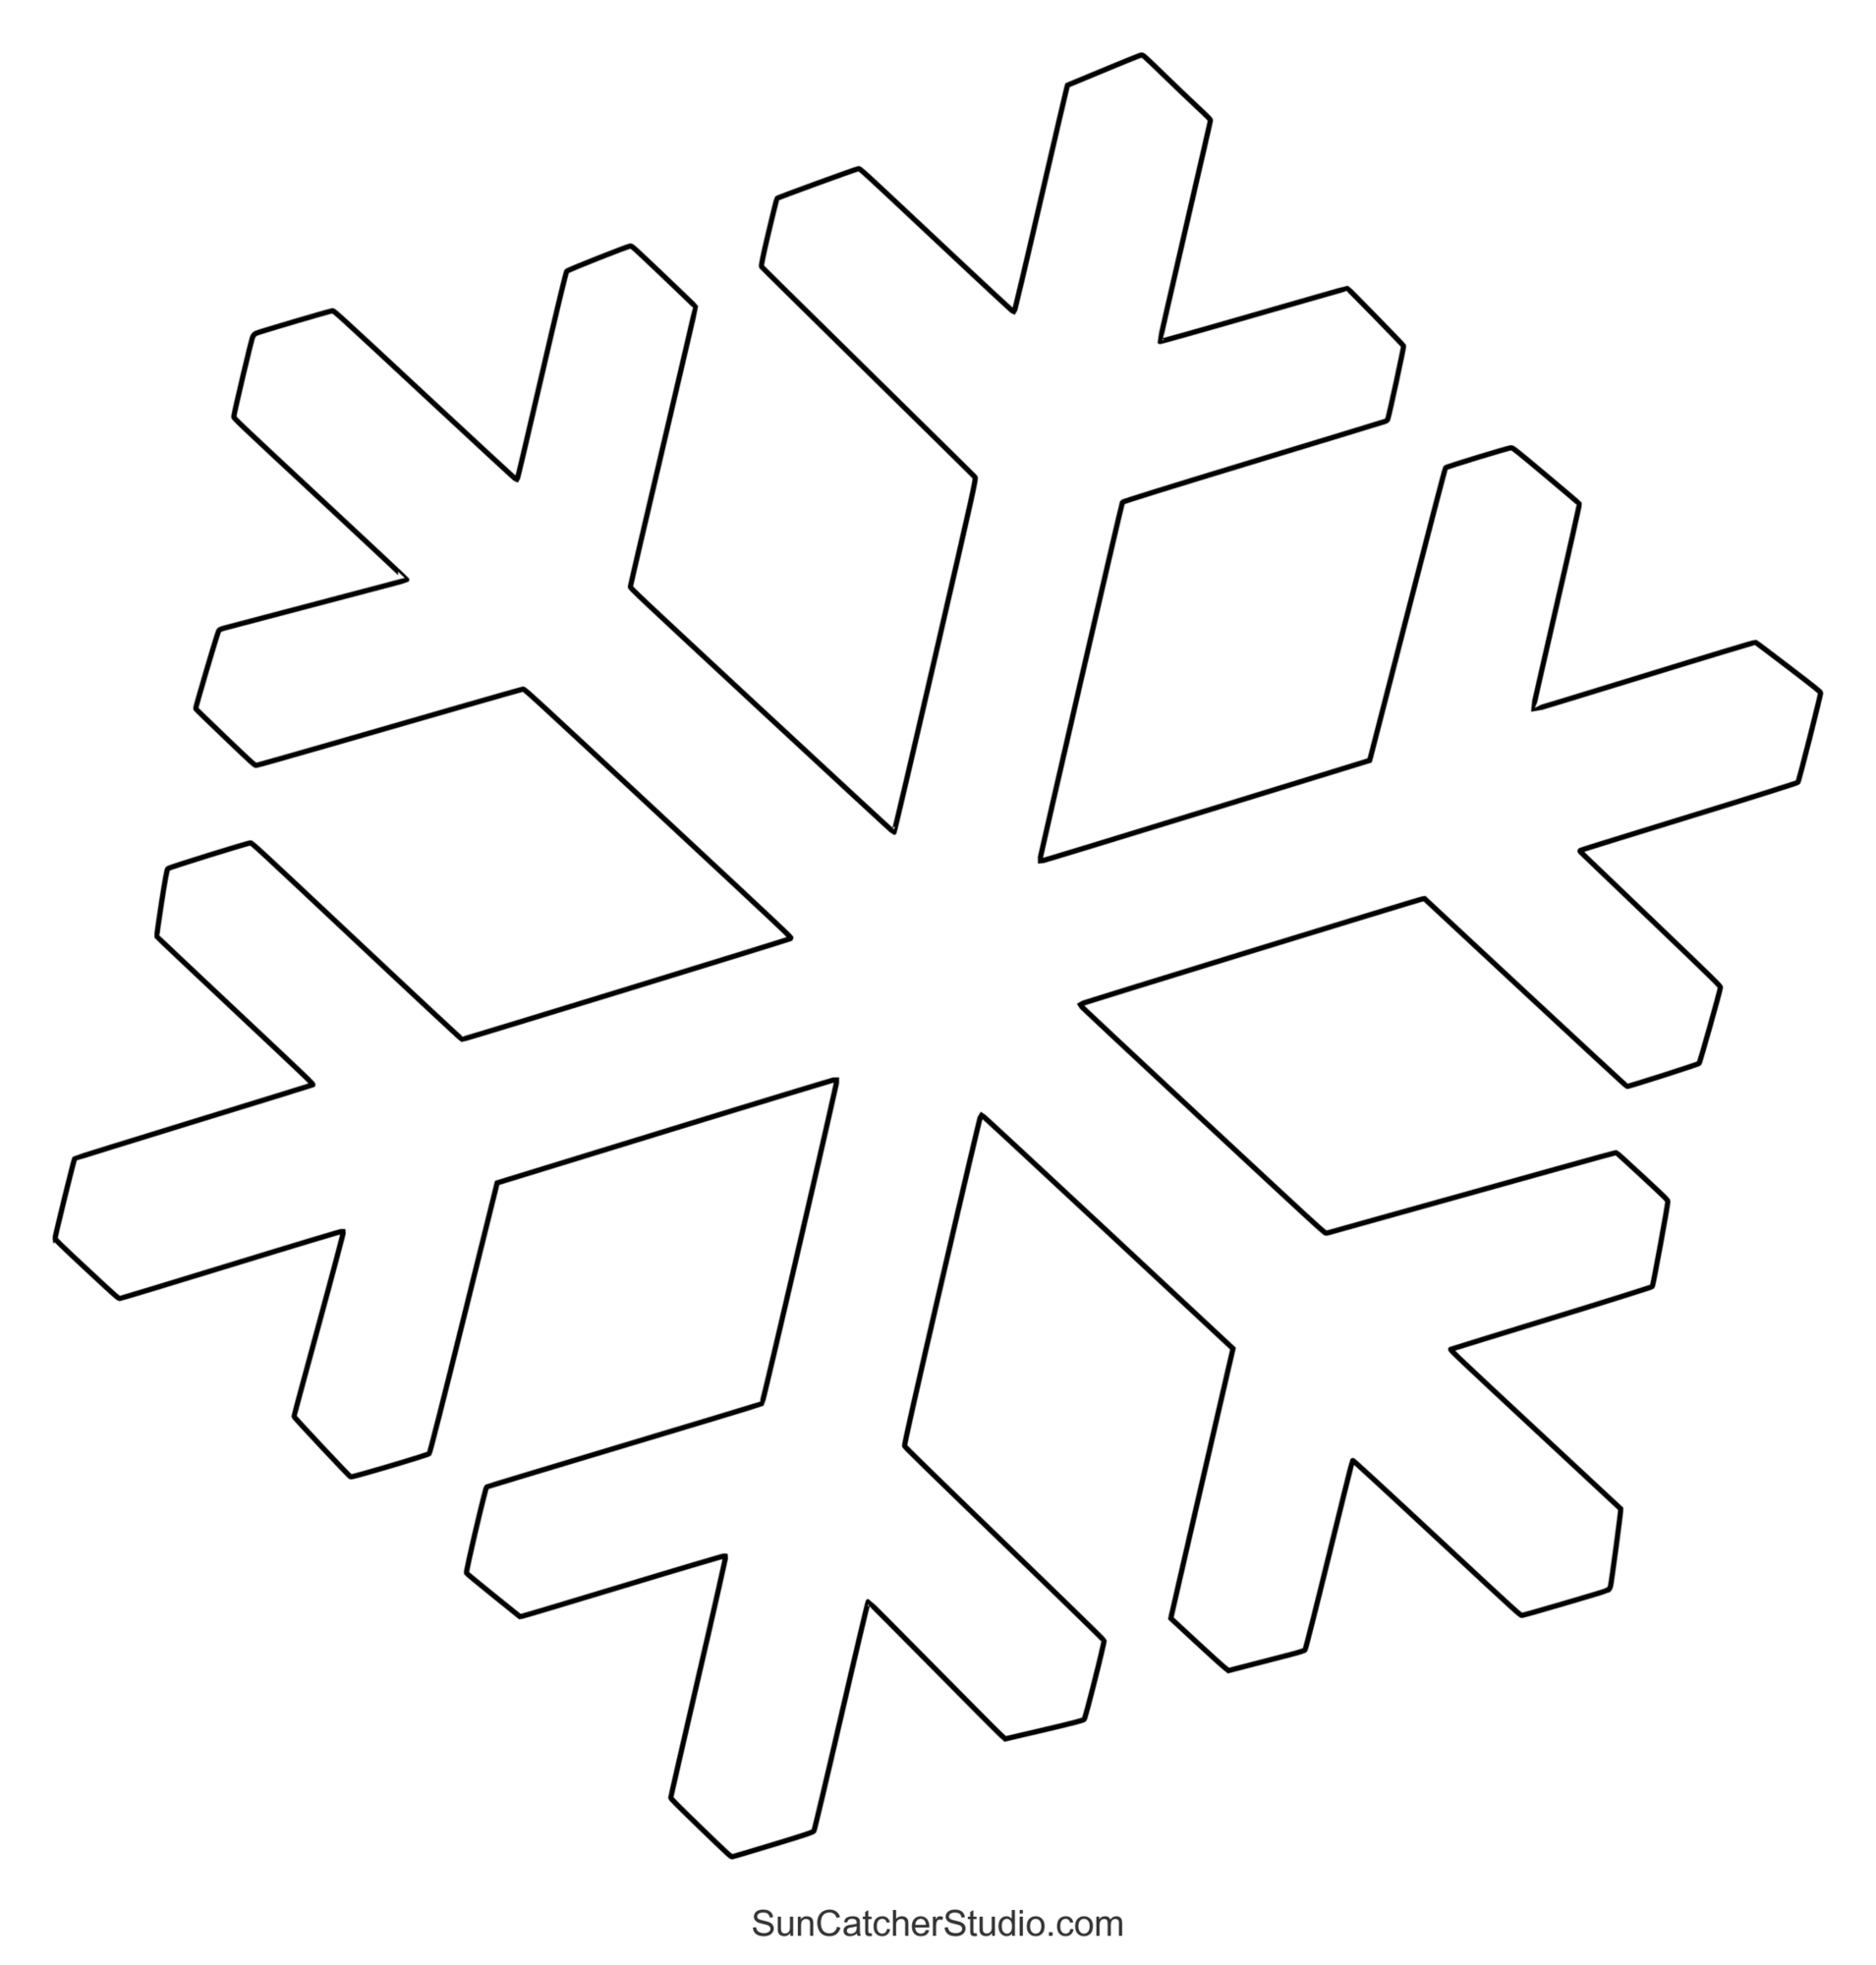 Free Printable Snowflake Templates – 10 Large & Small Stencil